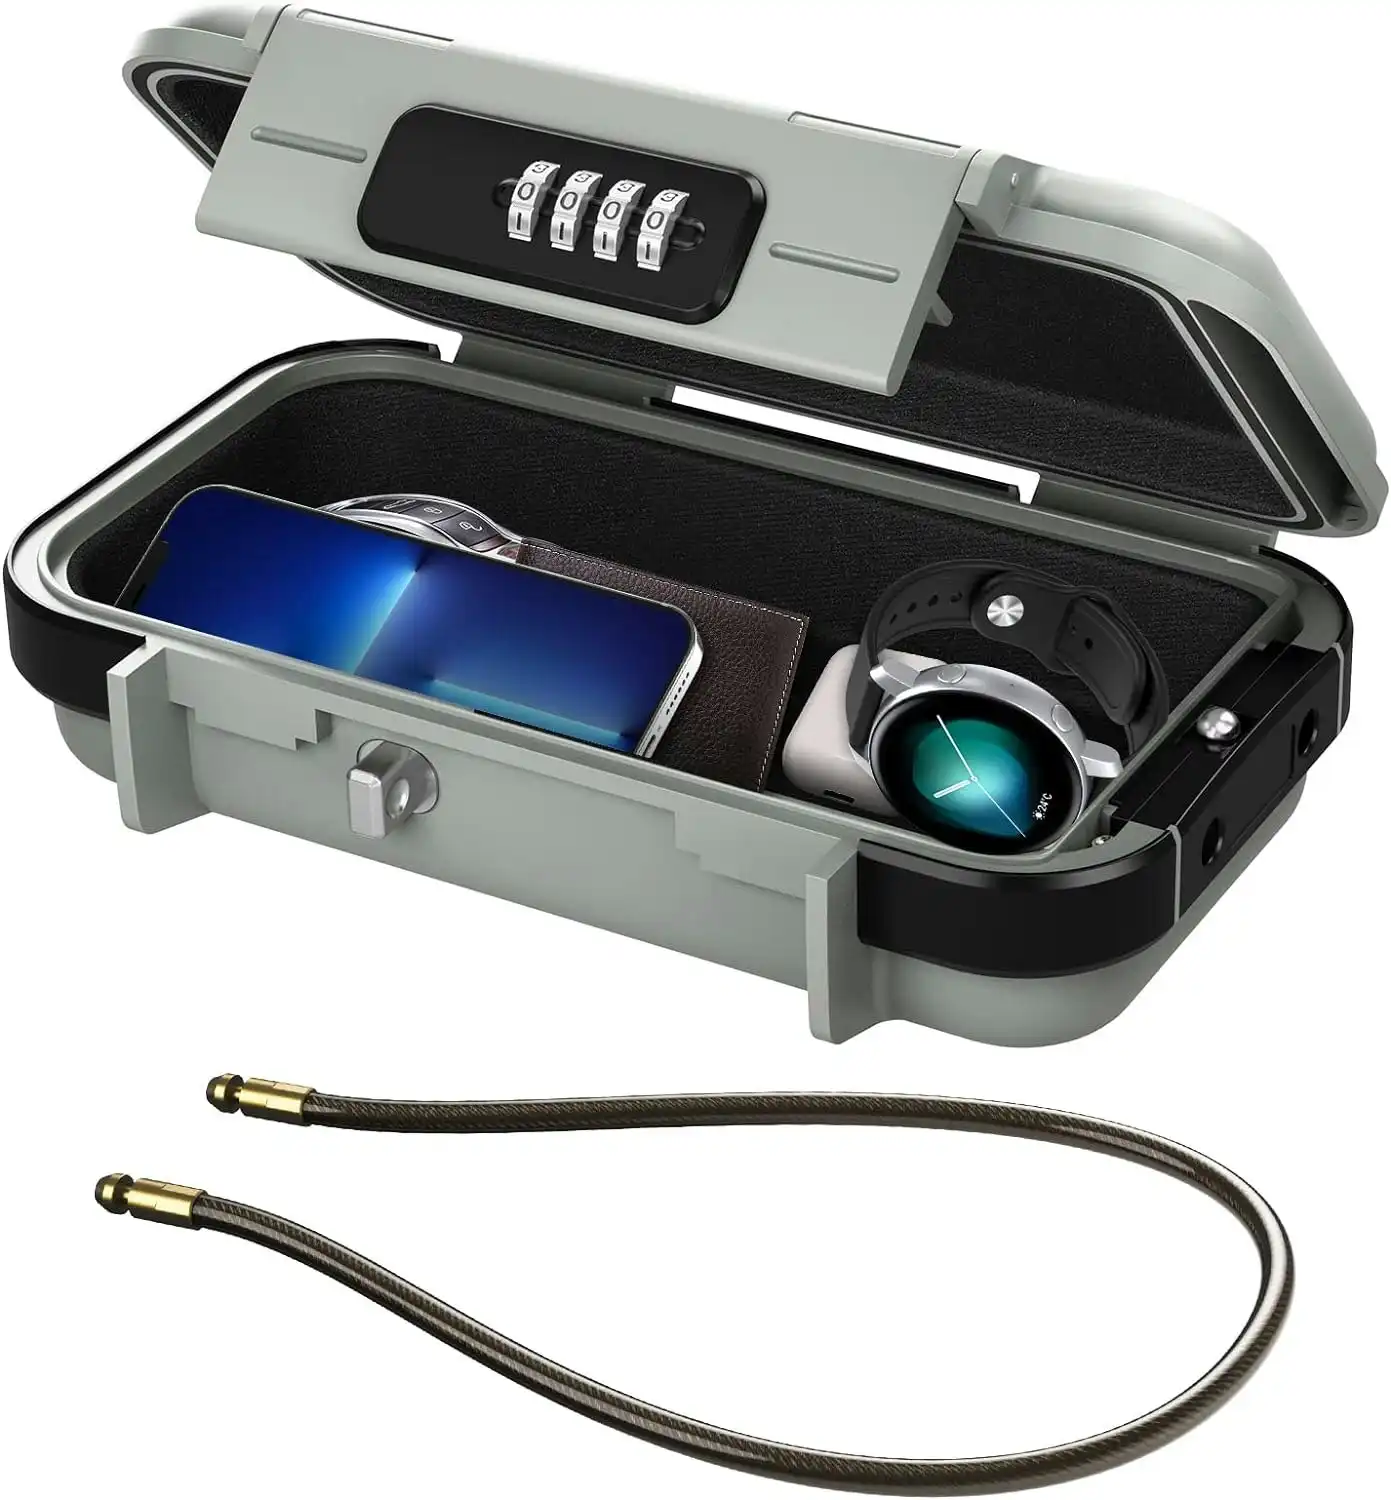 Secure Portable Lock Box: 4 Digit Combination Keys, Long Shackle, Travel Safe